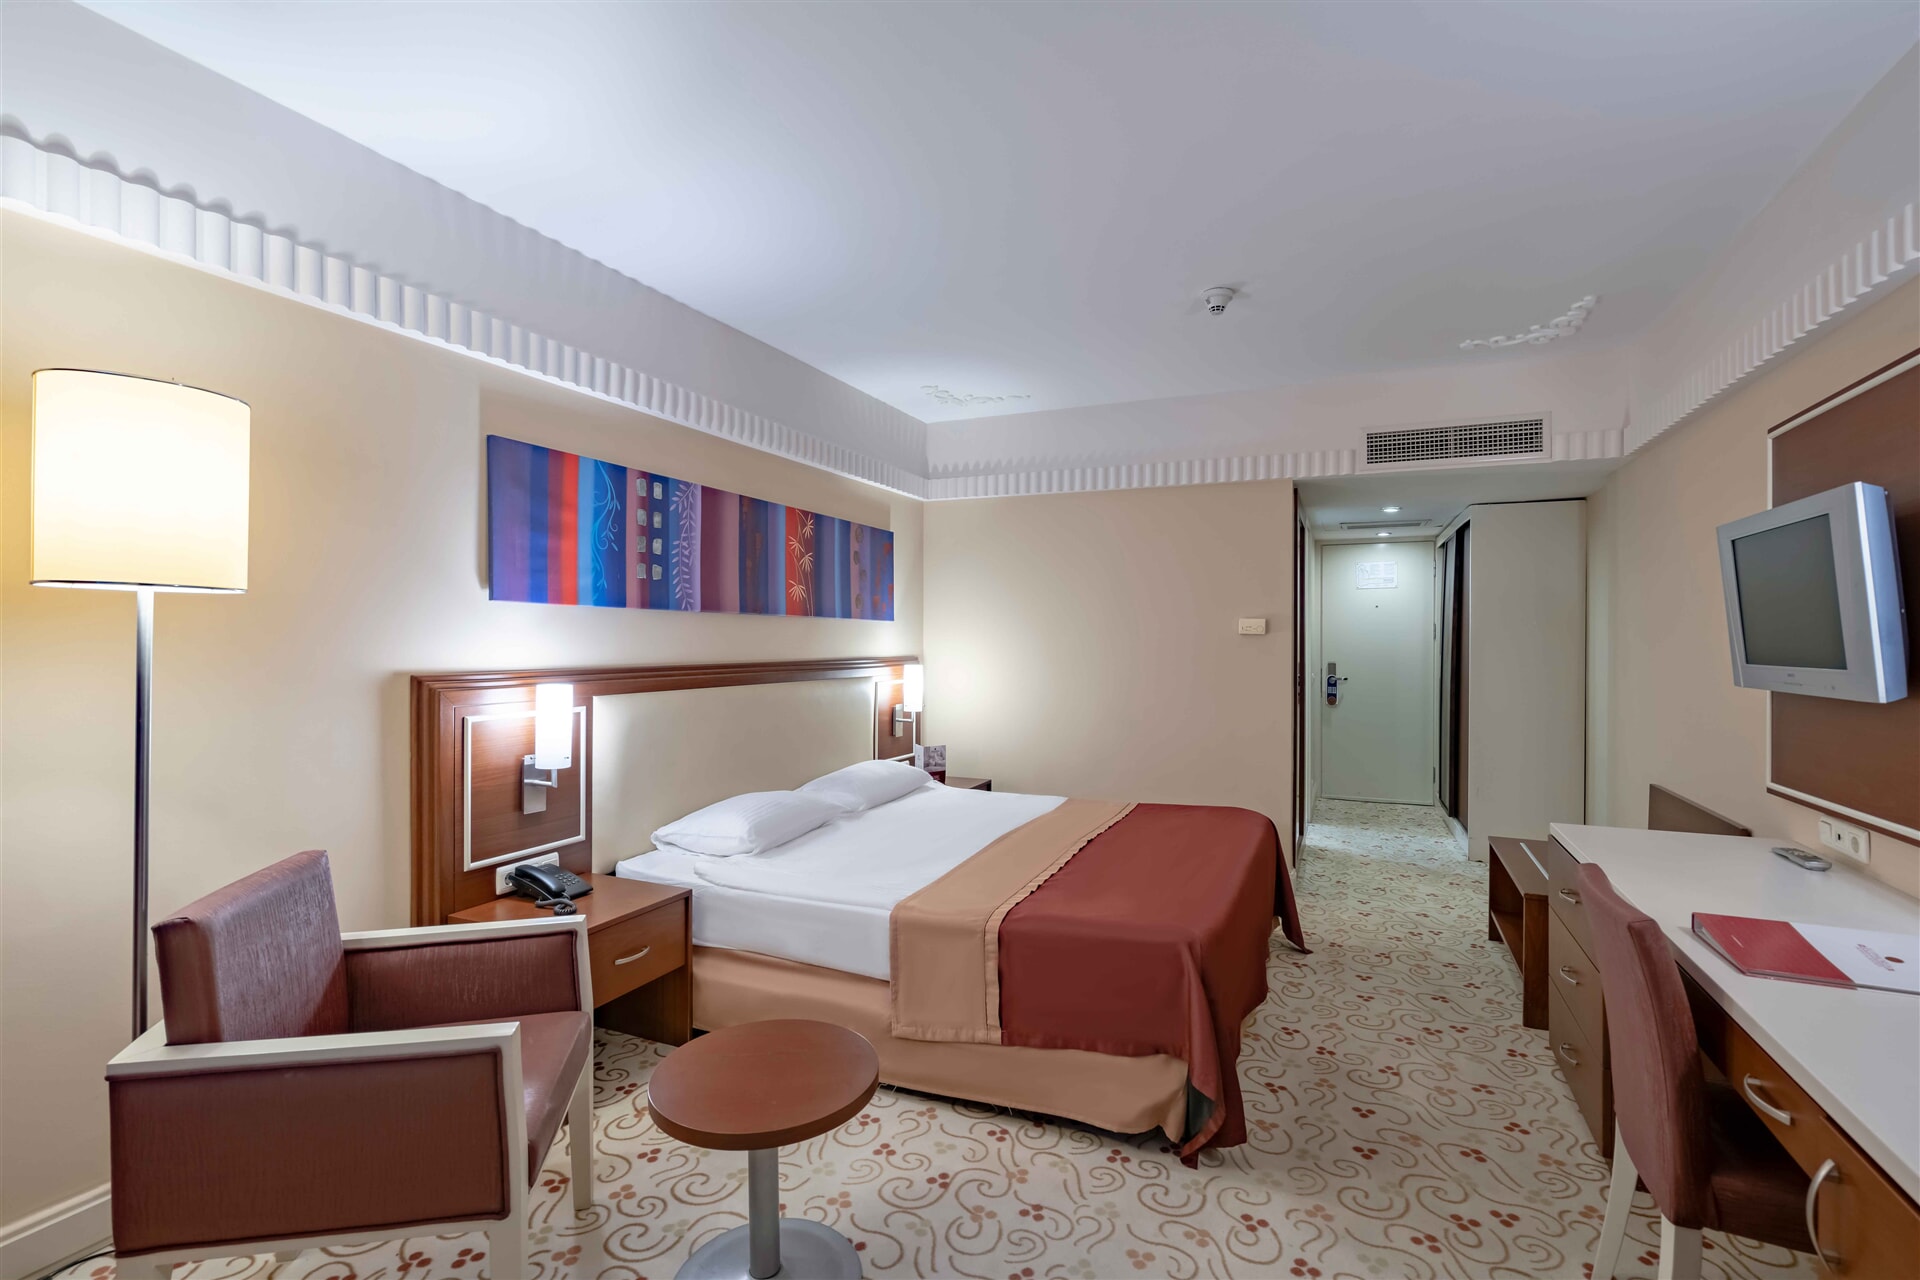 EUPHORIA TEKİROVA HOTEL – Hotel Room